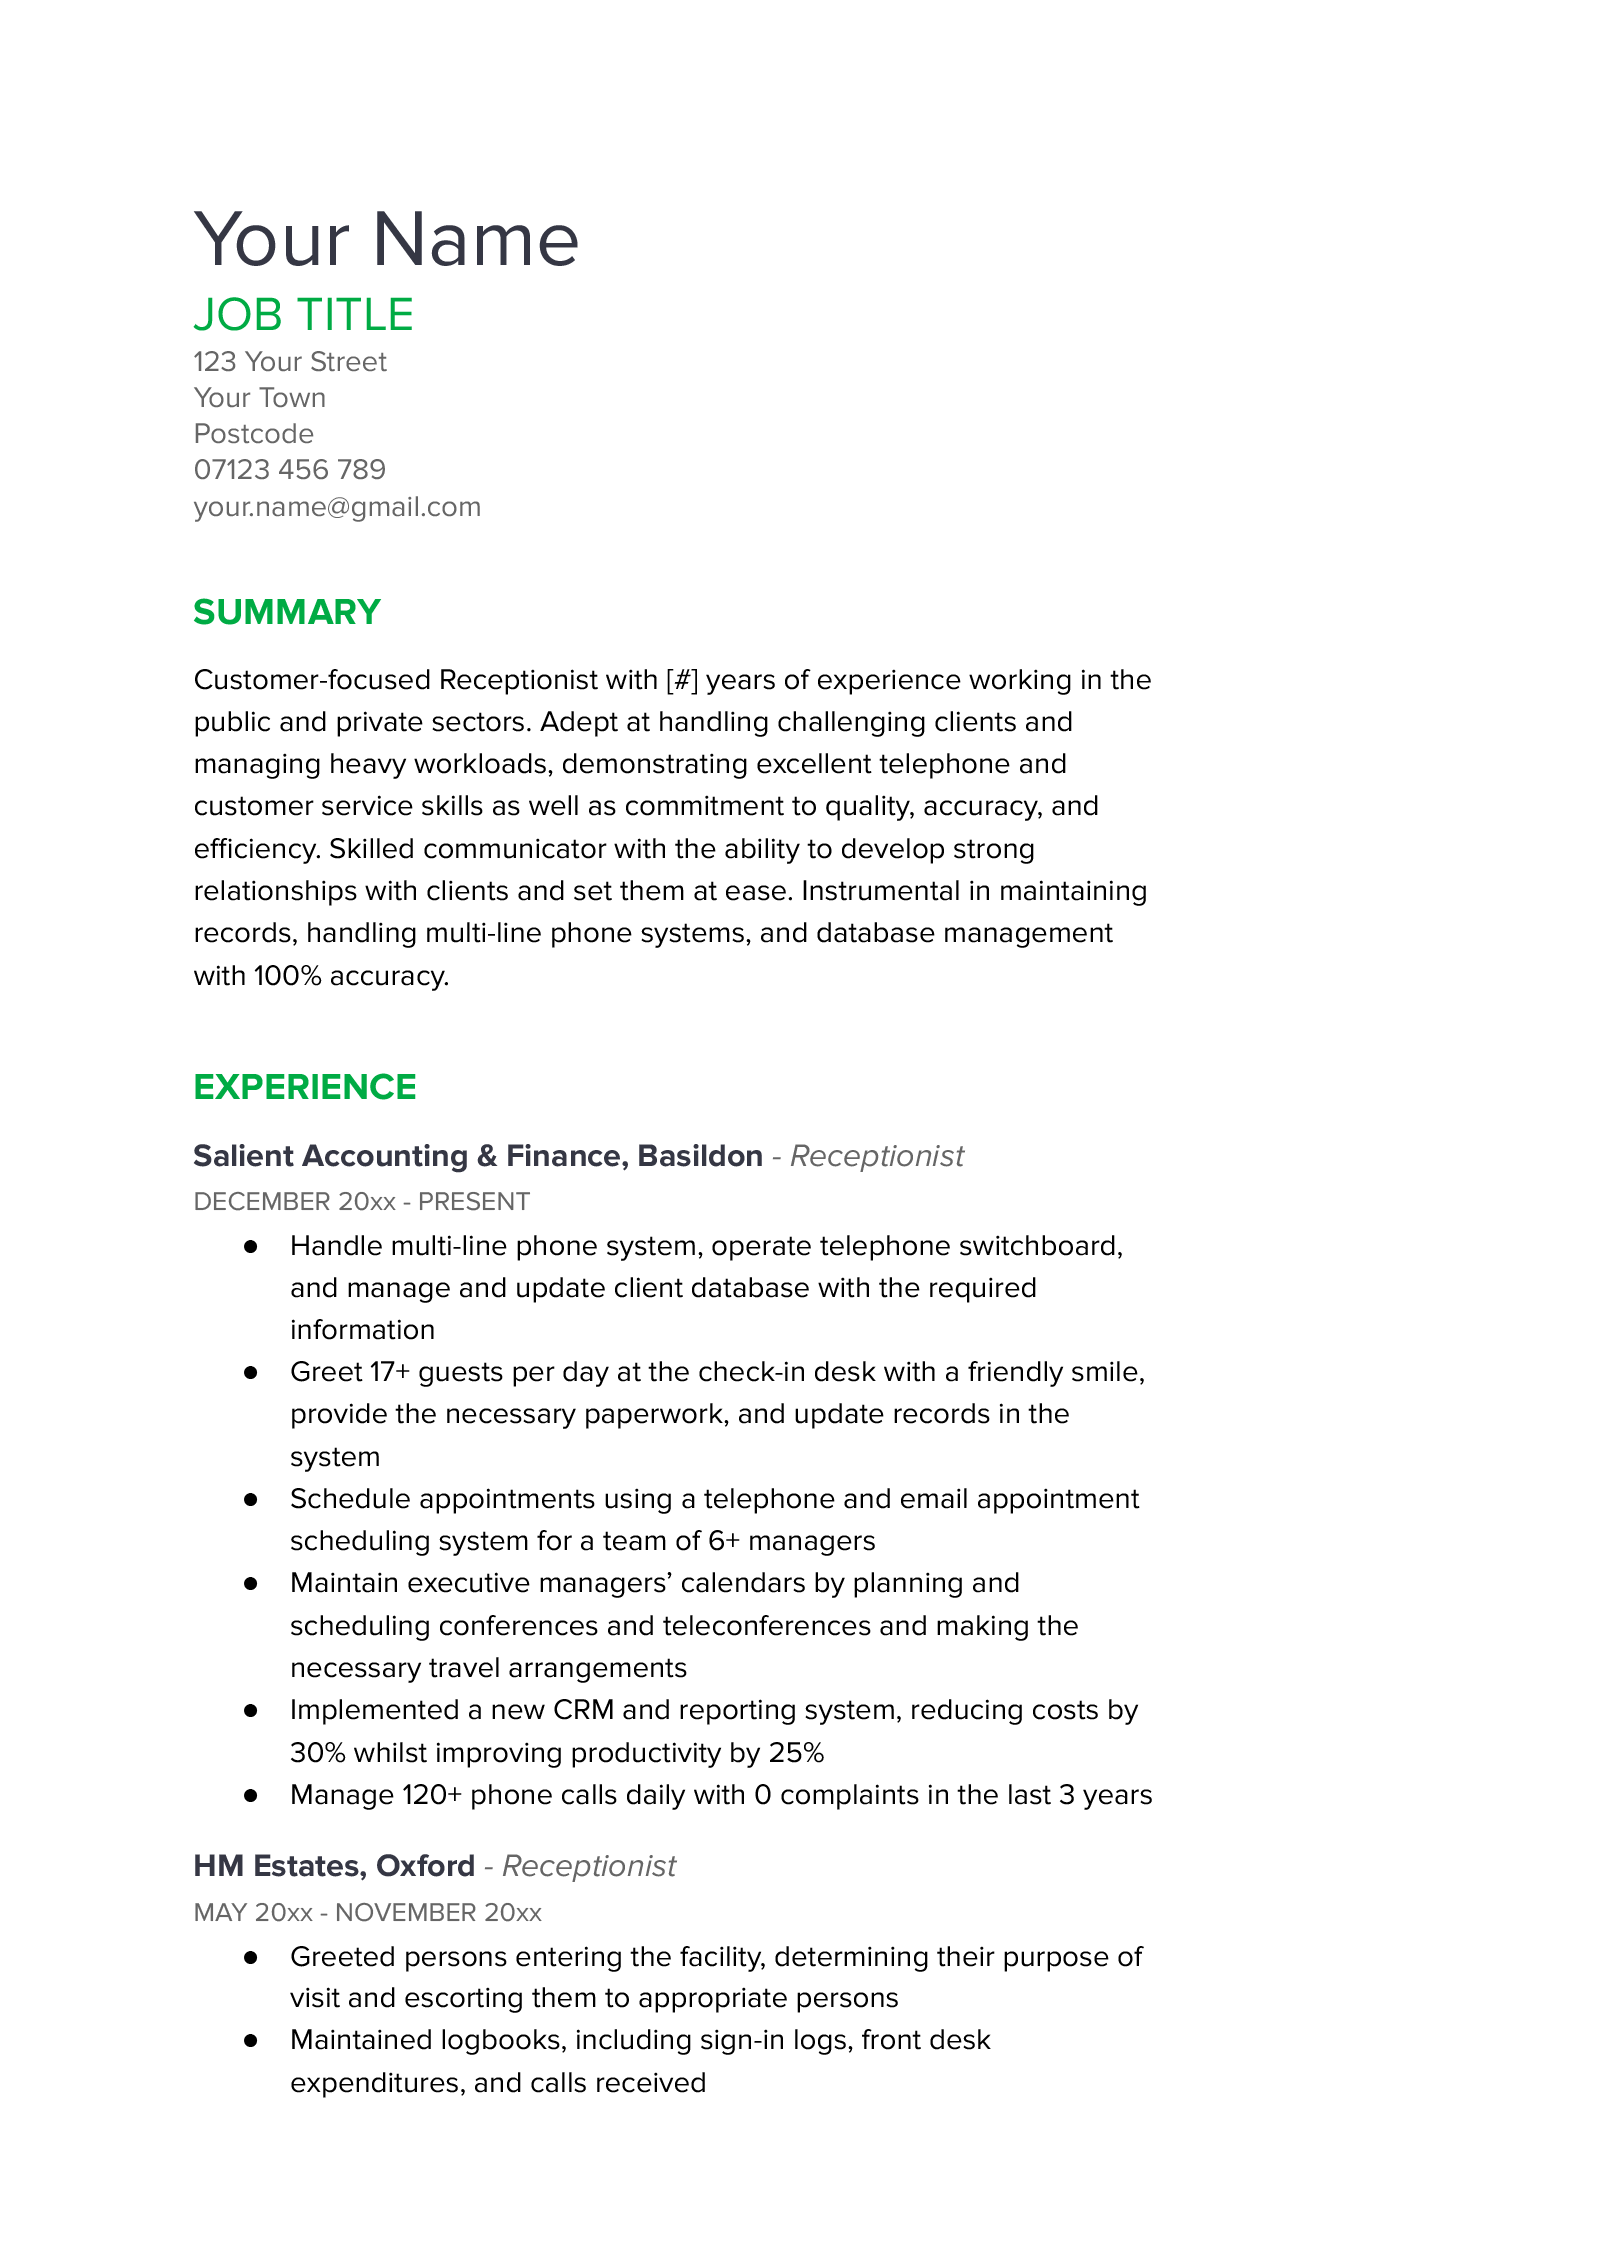 An example of the Spearmint Google Docs CV template